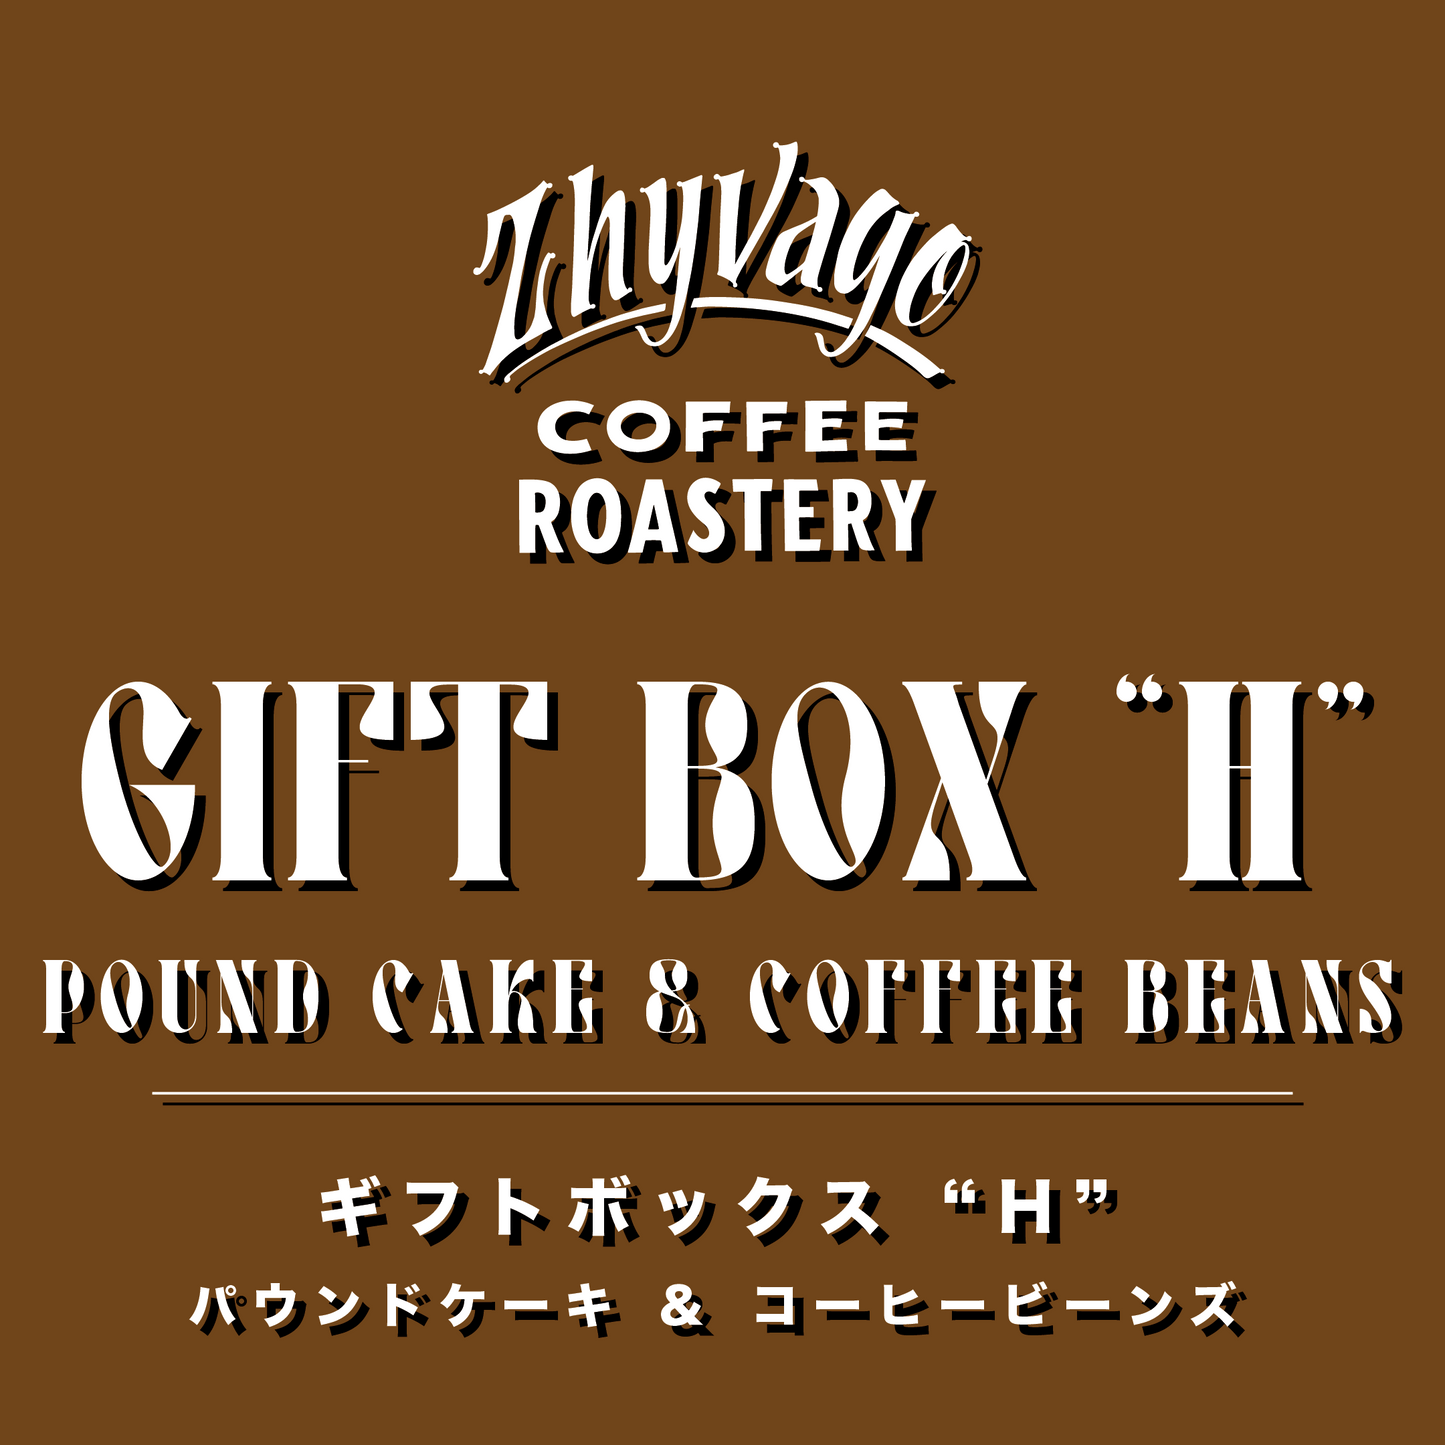 GIFT BOX-H Pound Cake & Coffee Beans